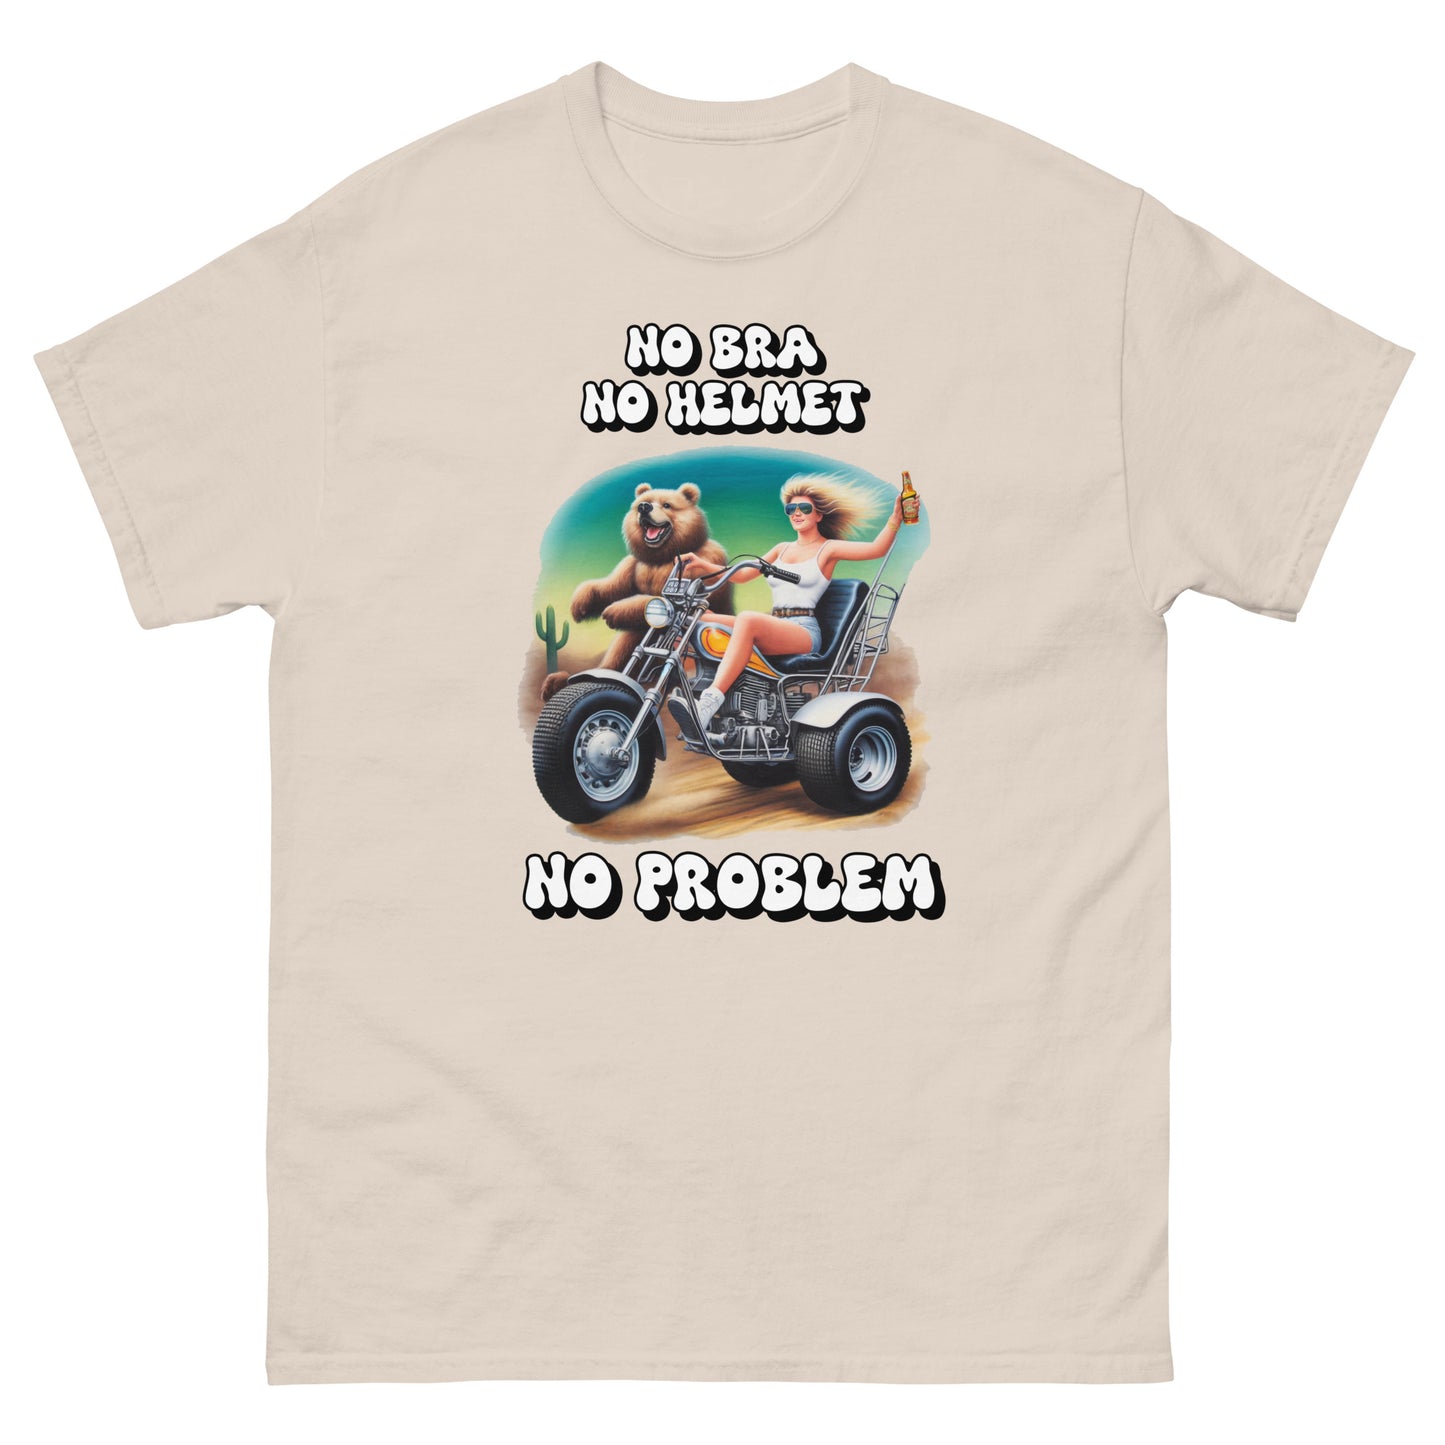 No Bra No Helmet No Problem design printed on t-shirt by Whistler Shirts